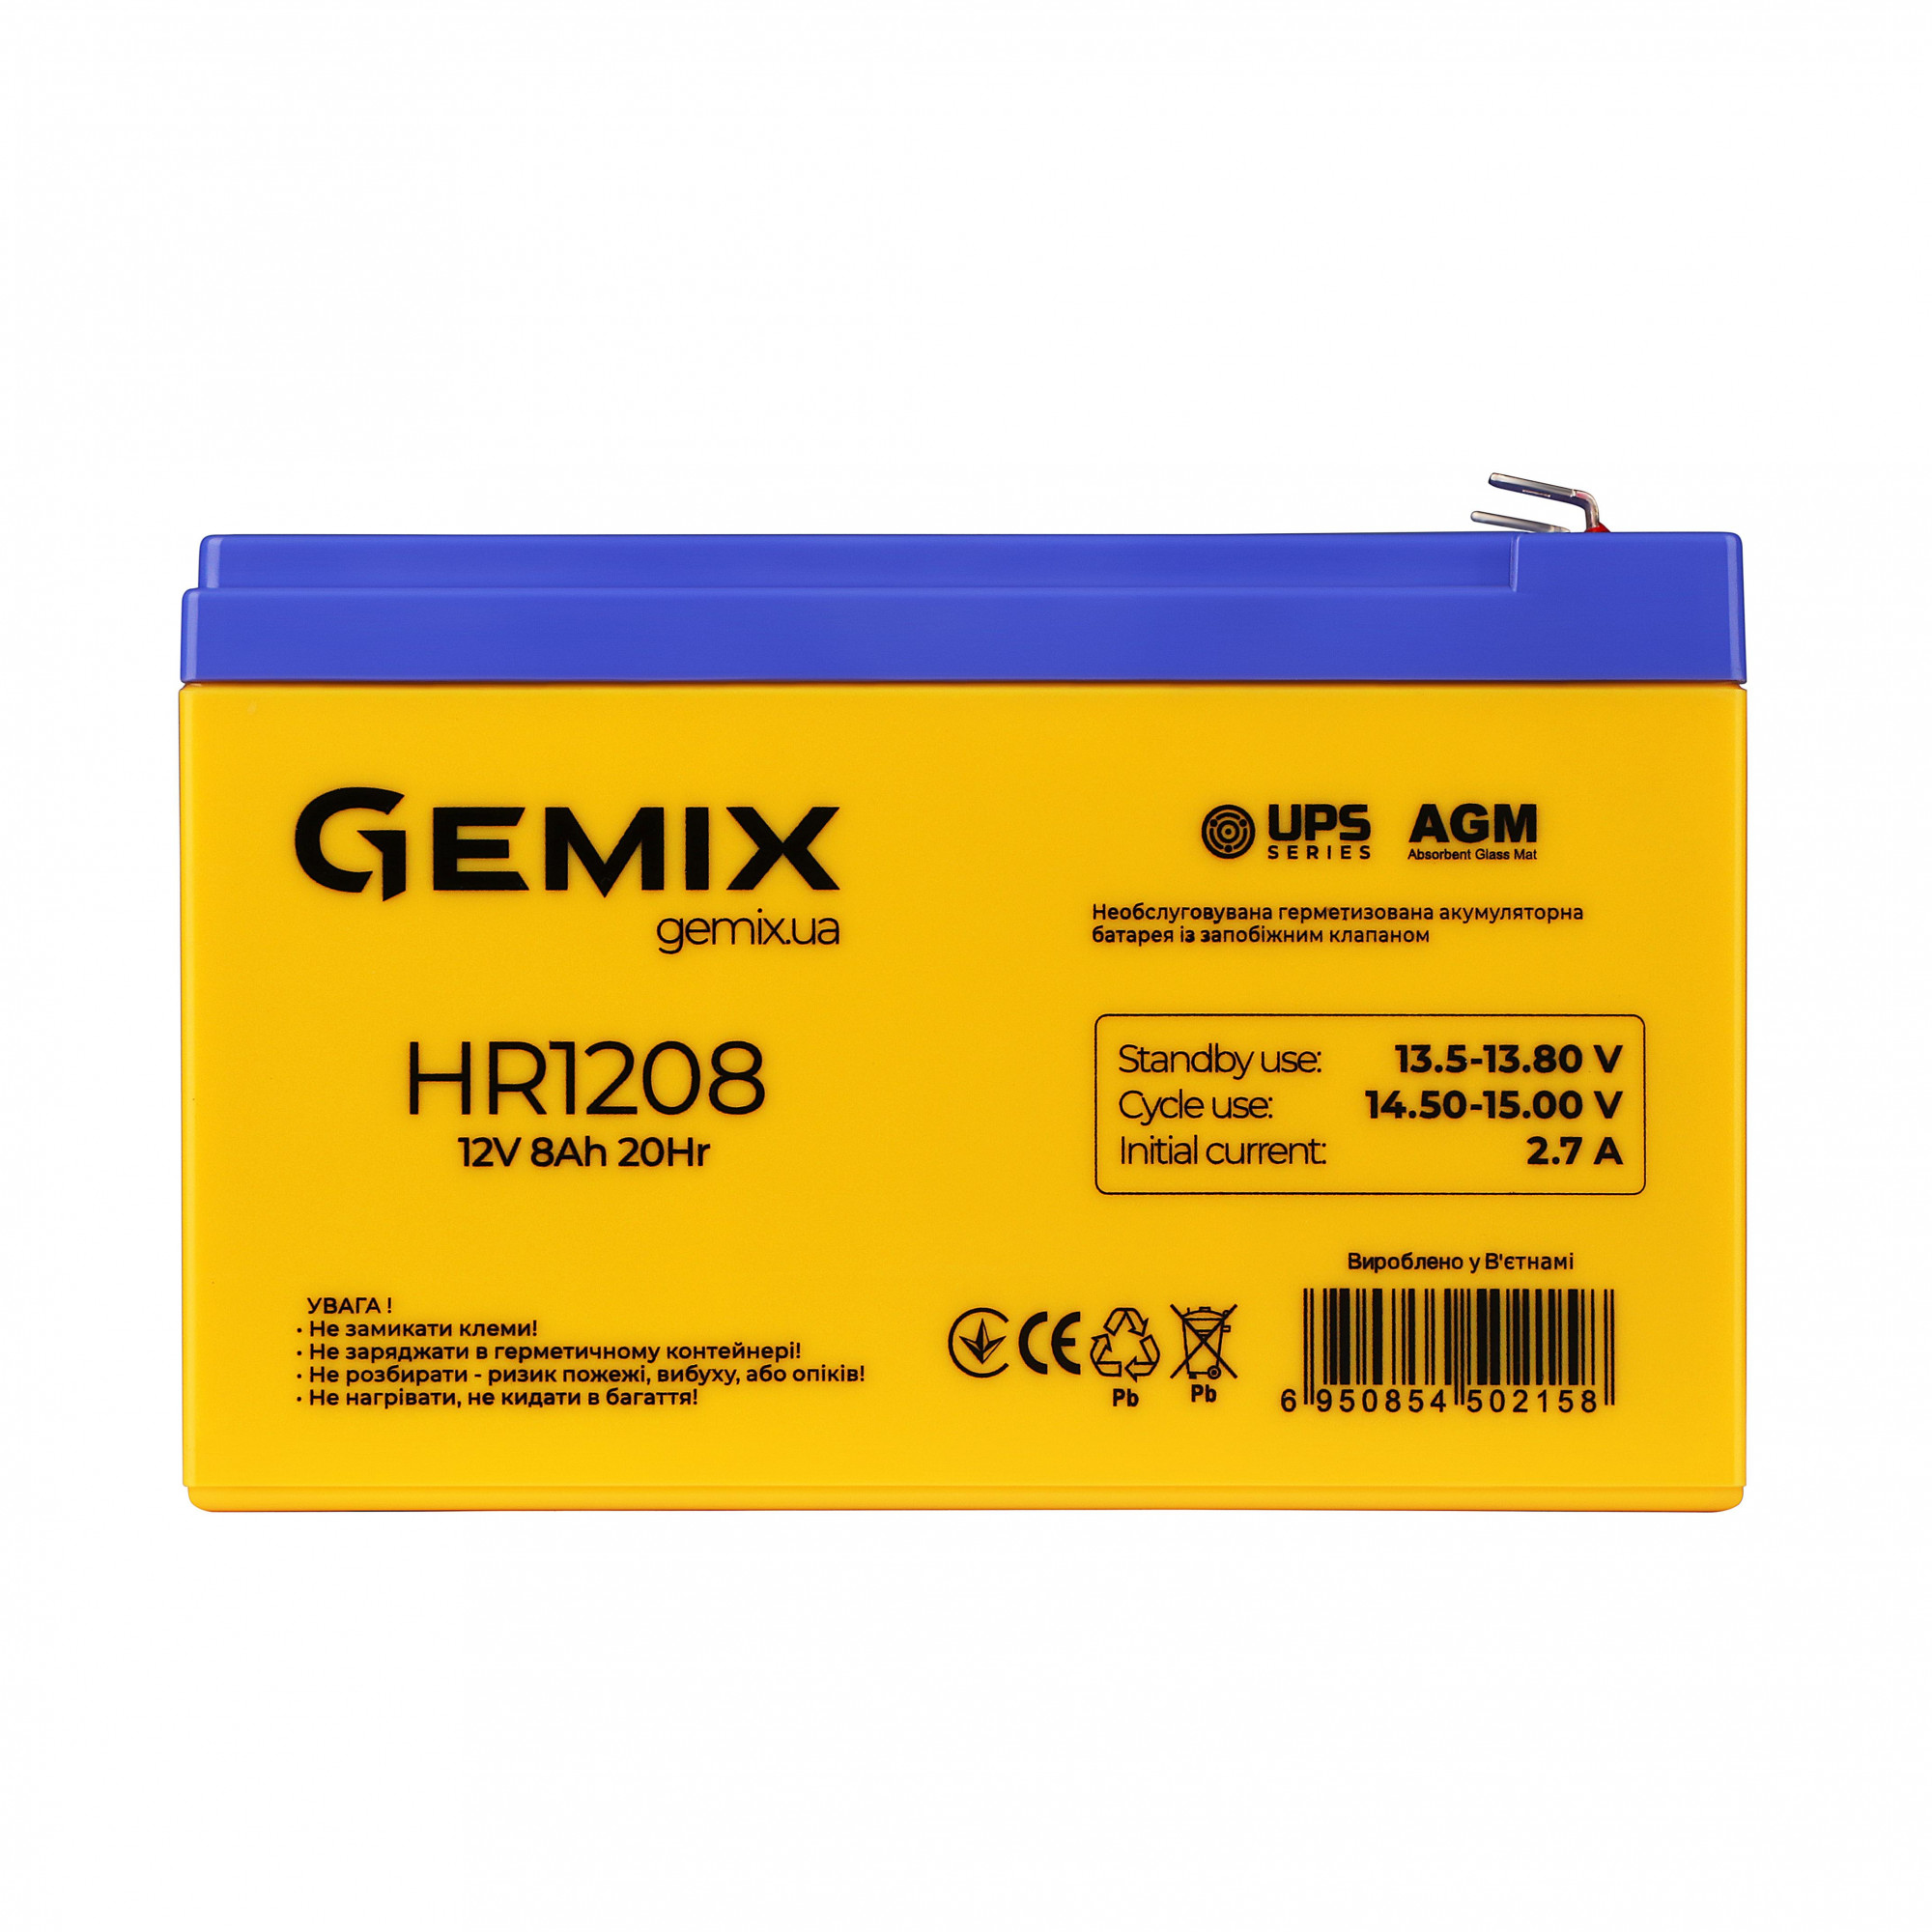 Gemix HR1209 - зображення 1